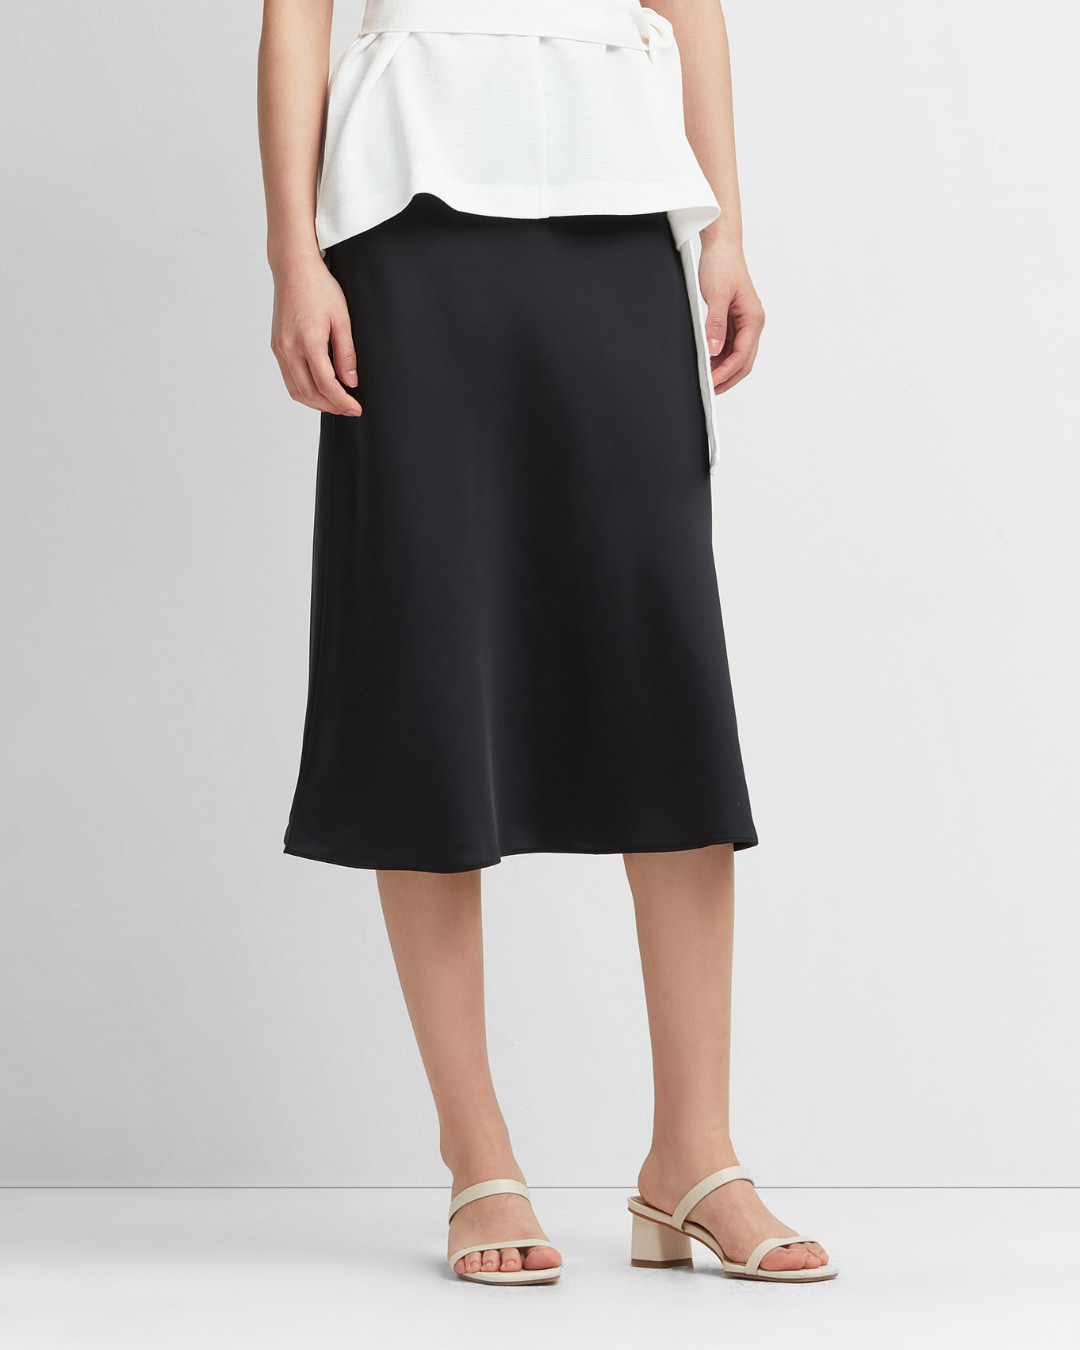 Spring Capsule Wardroble Black Skirt Style